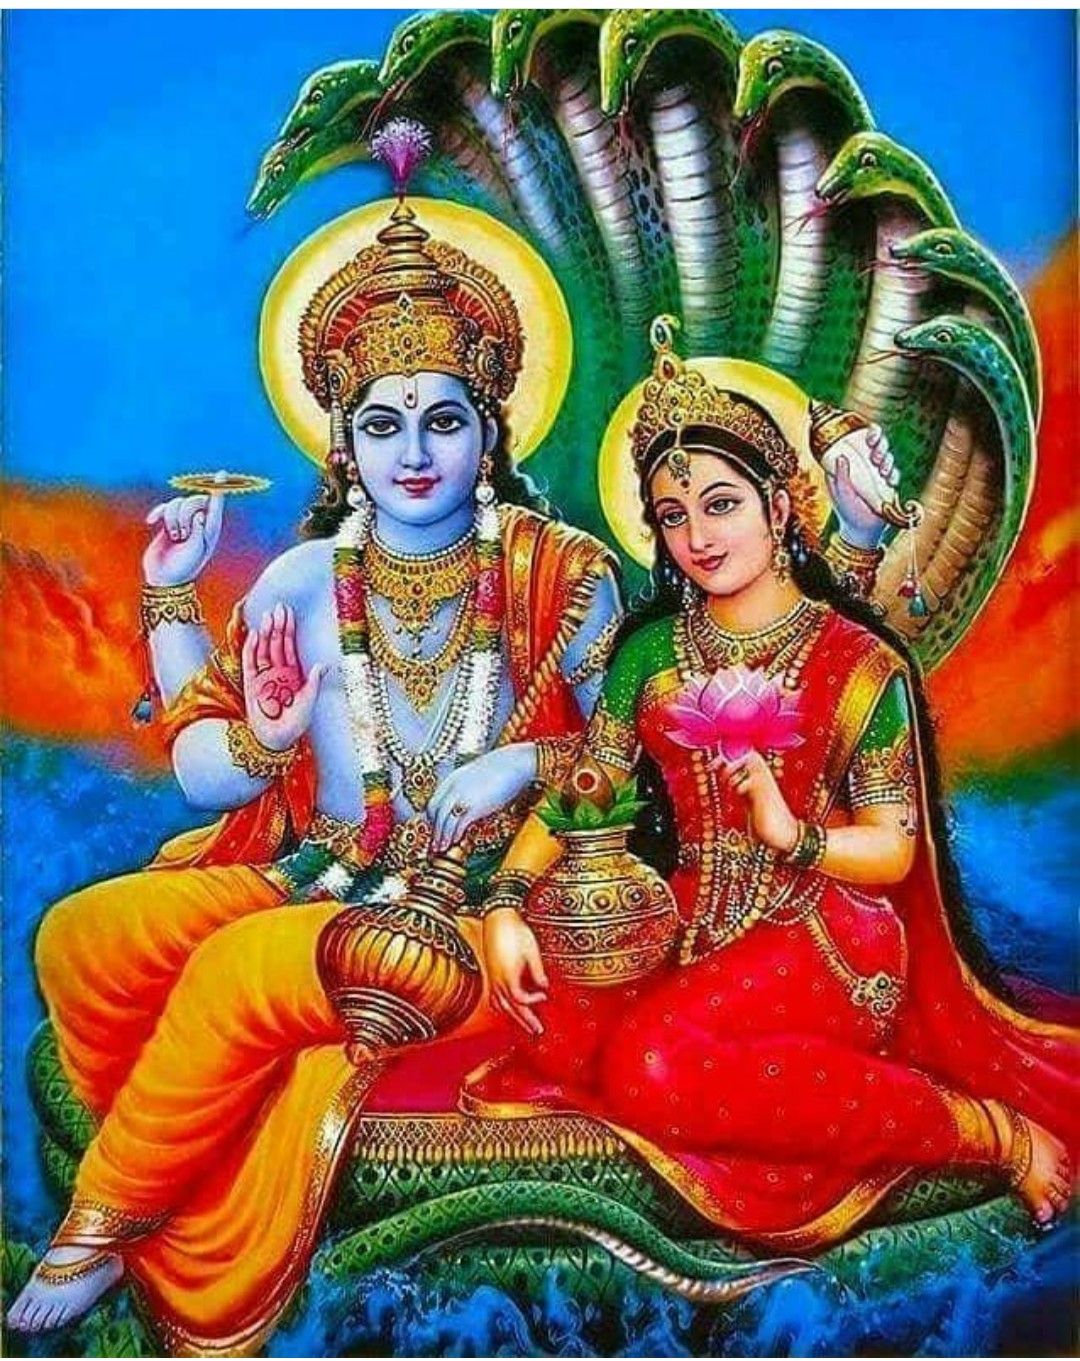 Beautiful Vishnu Laxmi Images Images Of Lord Vishnu And Lakshmi